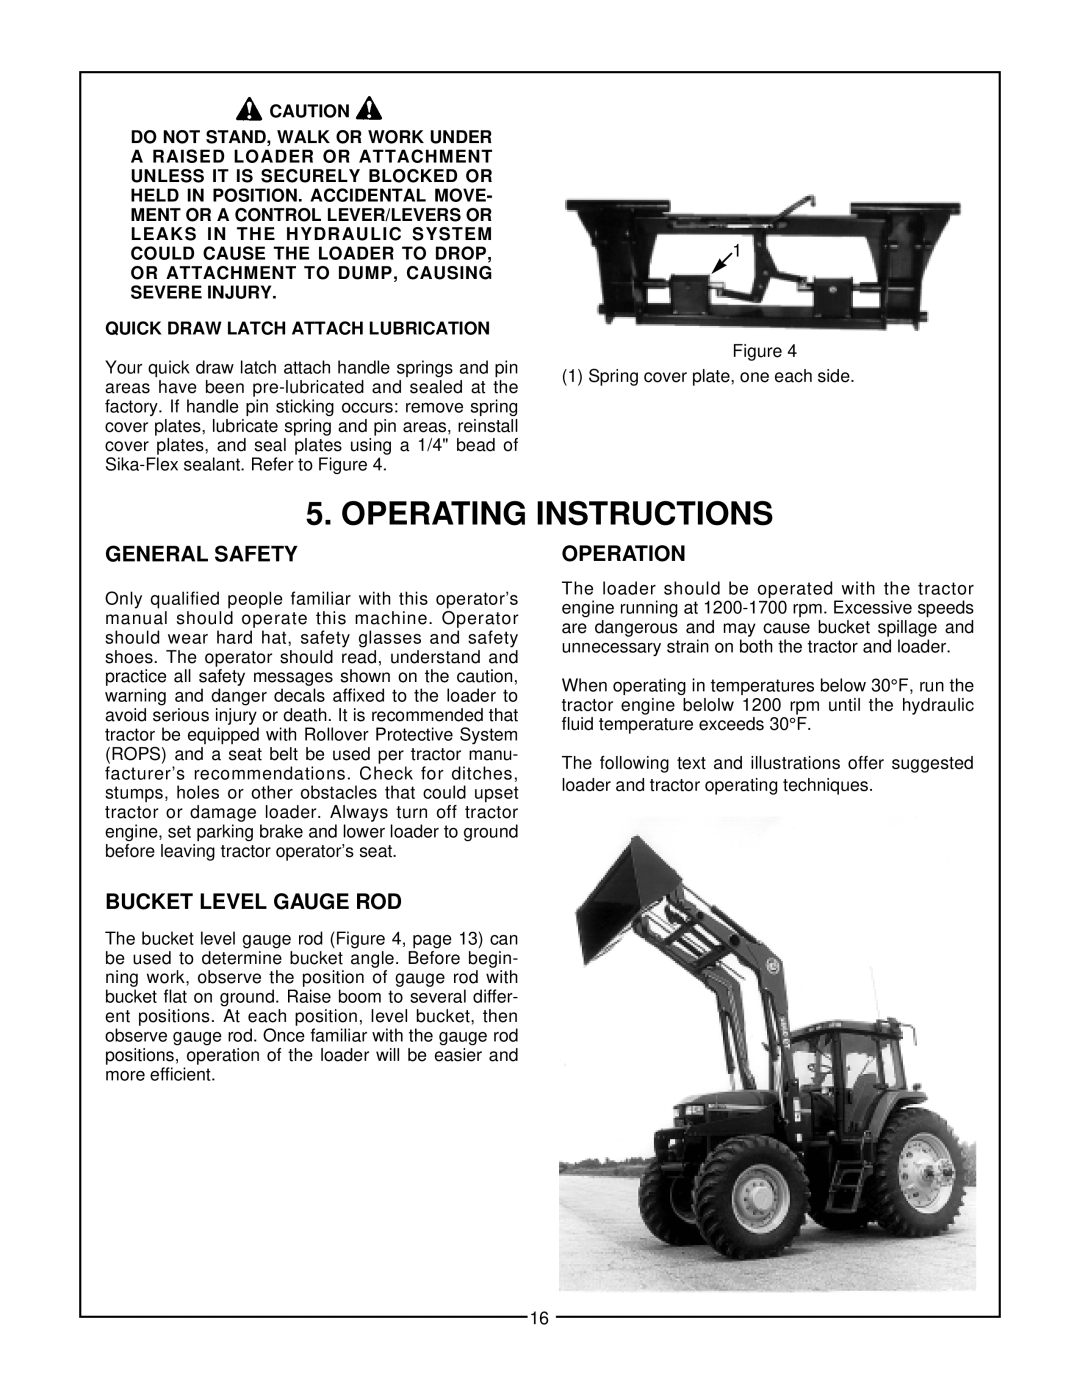 Bush Hog 3860 QT manual Operating Instructions, General Safety, Bucket Level Gauge Rod, Operation 